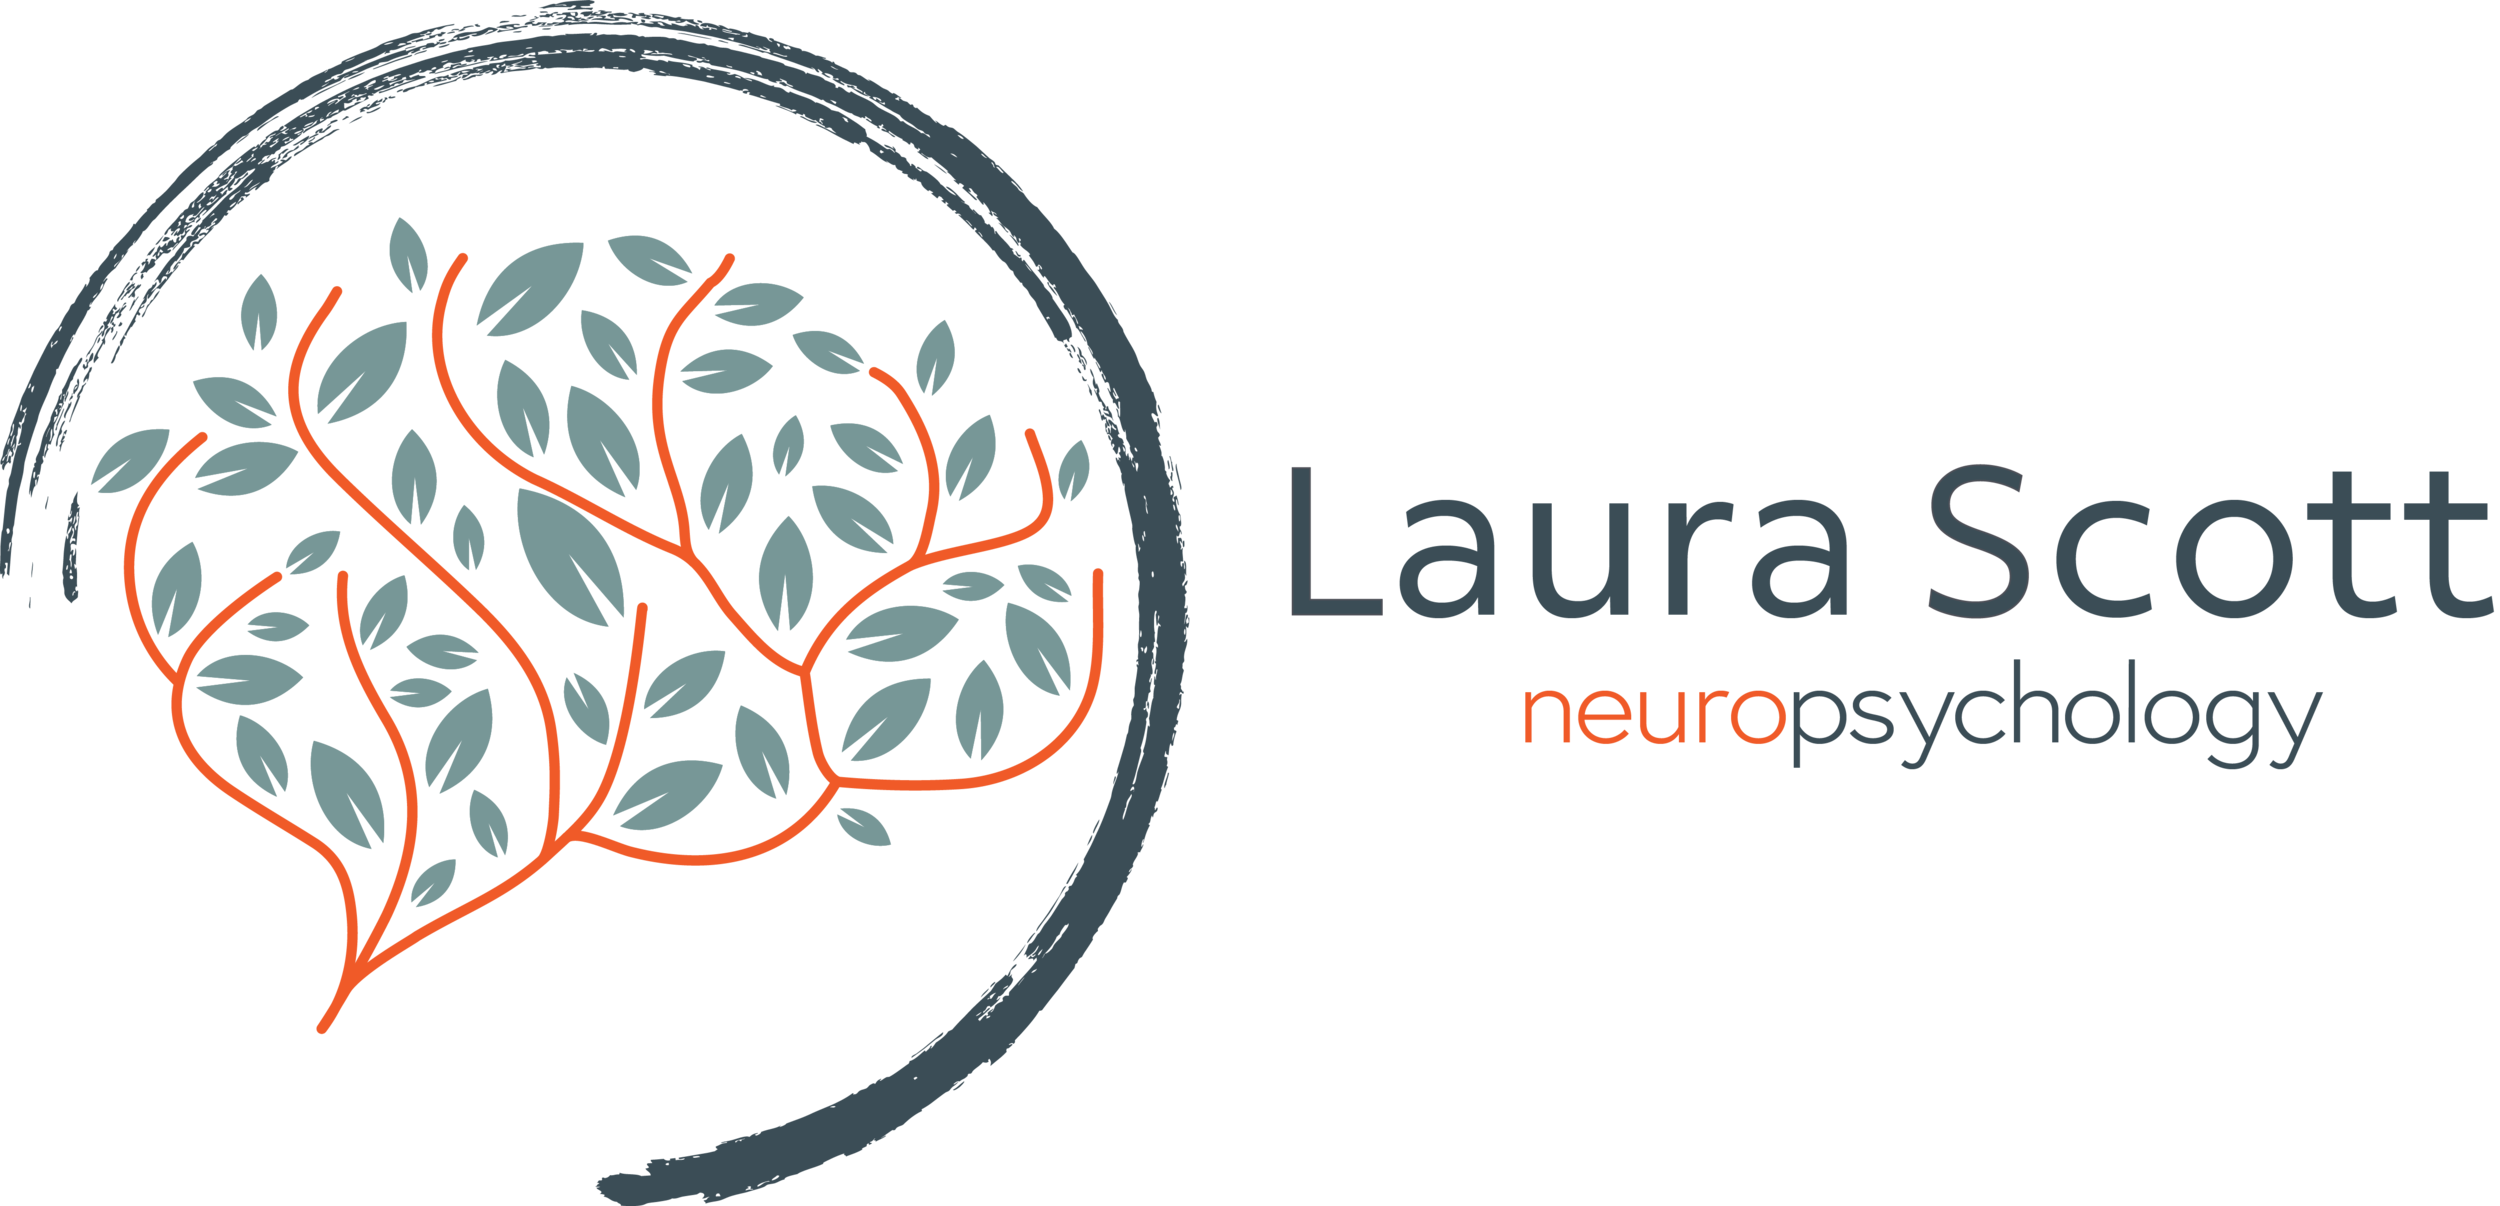 Laura Scott Neuropsychology